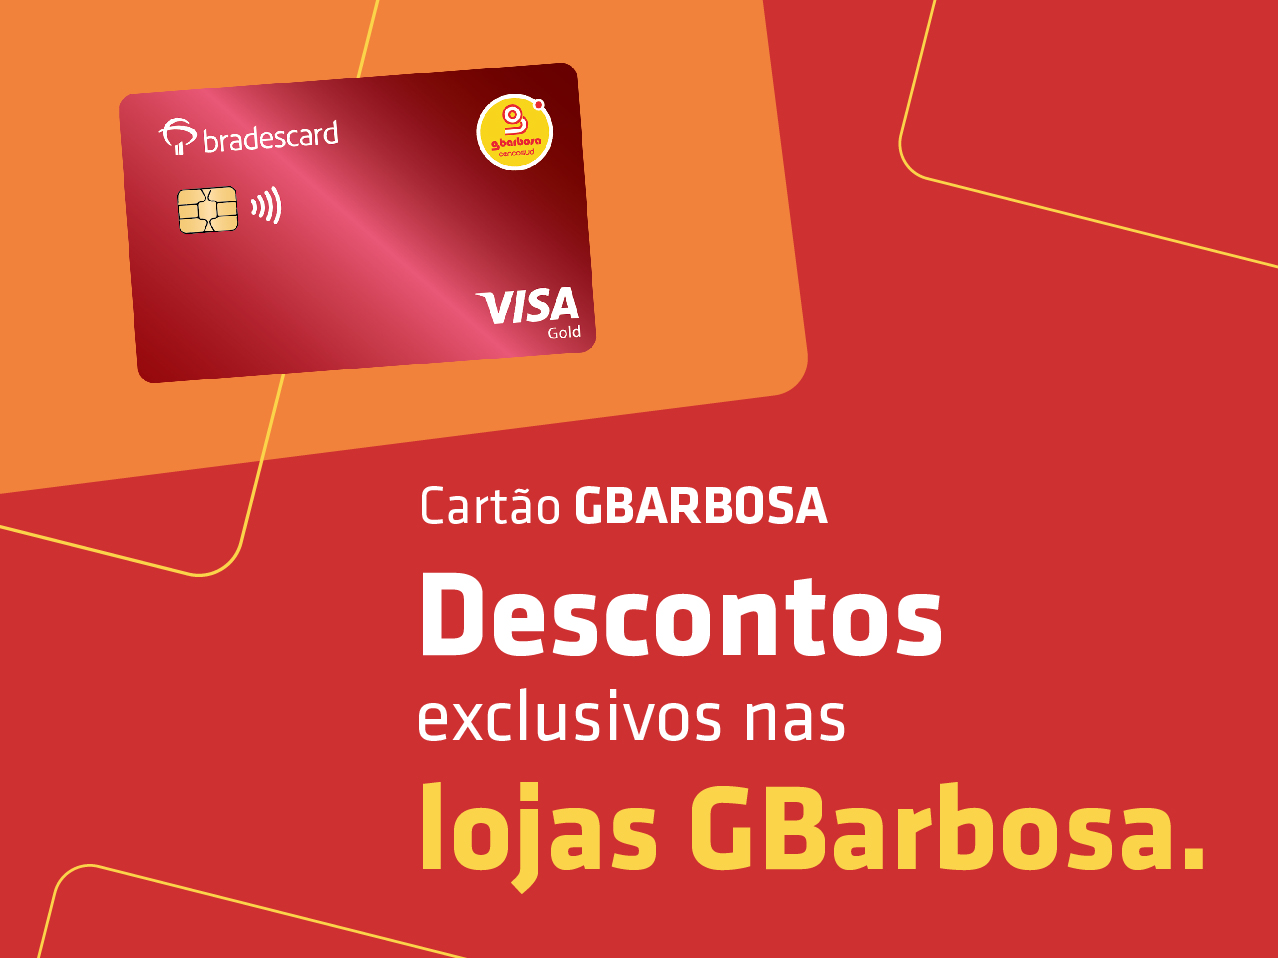 Cencosud GBarbosa Visa Gold